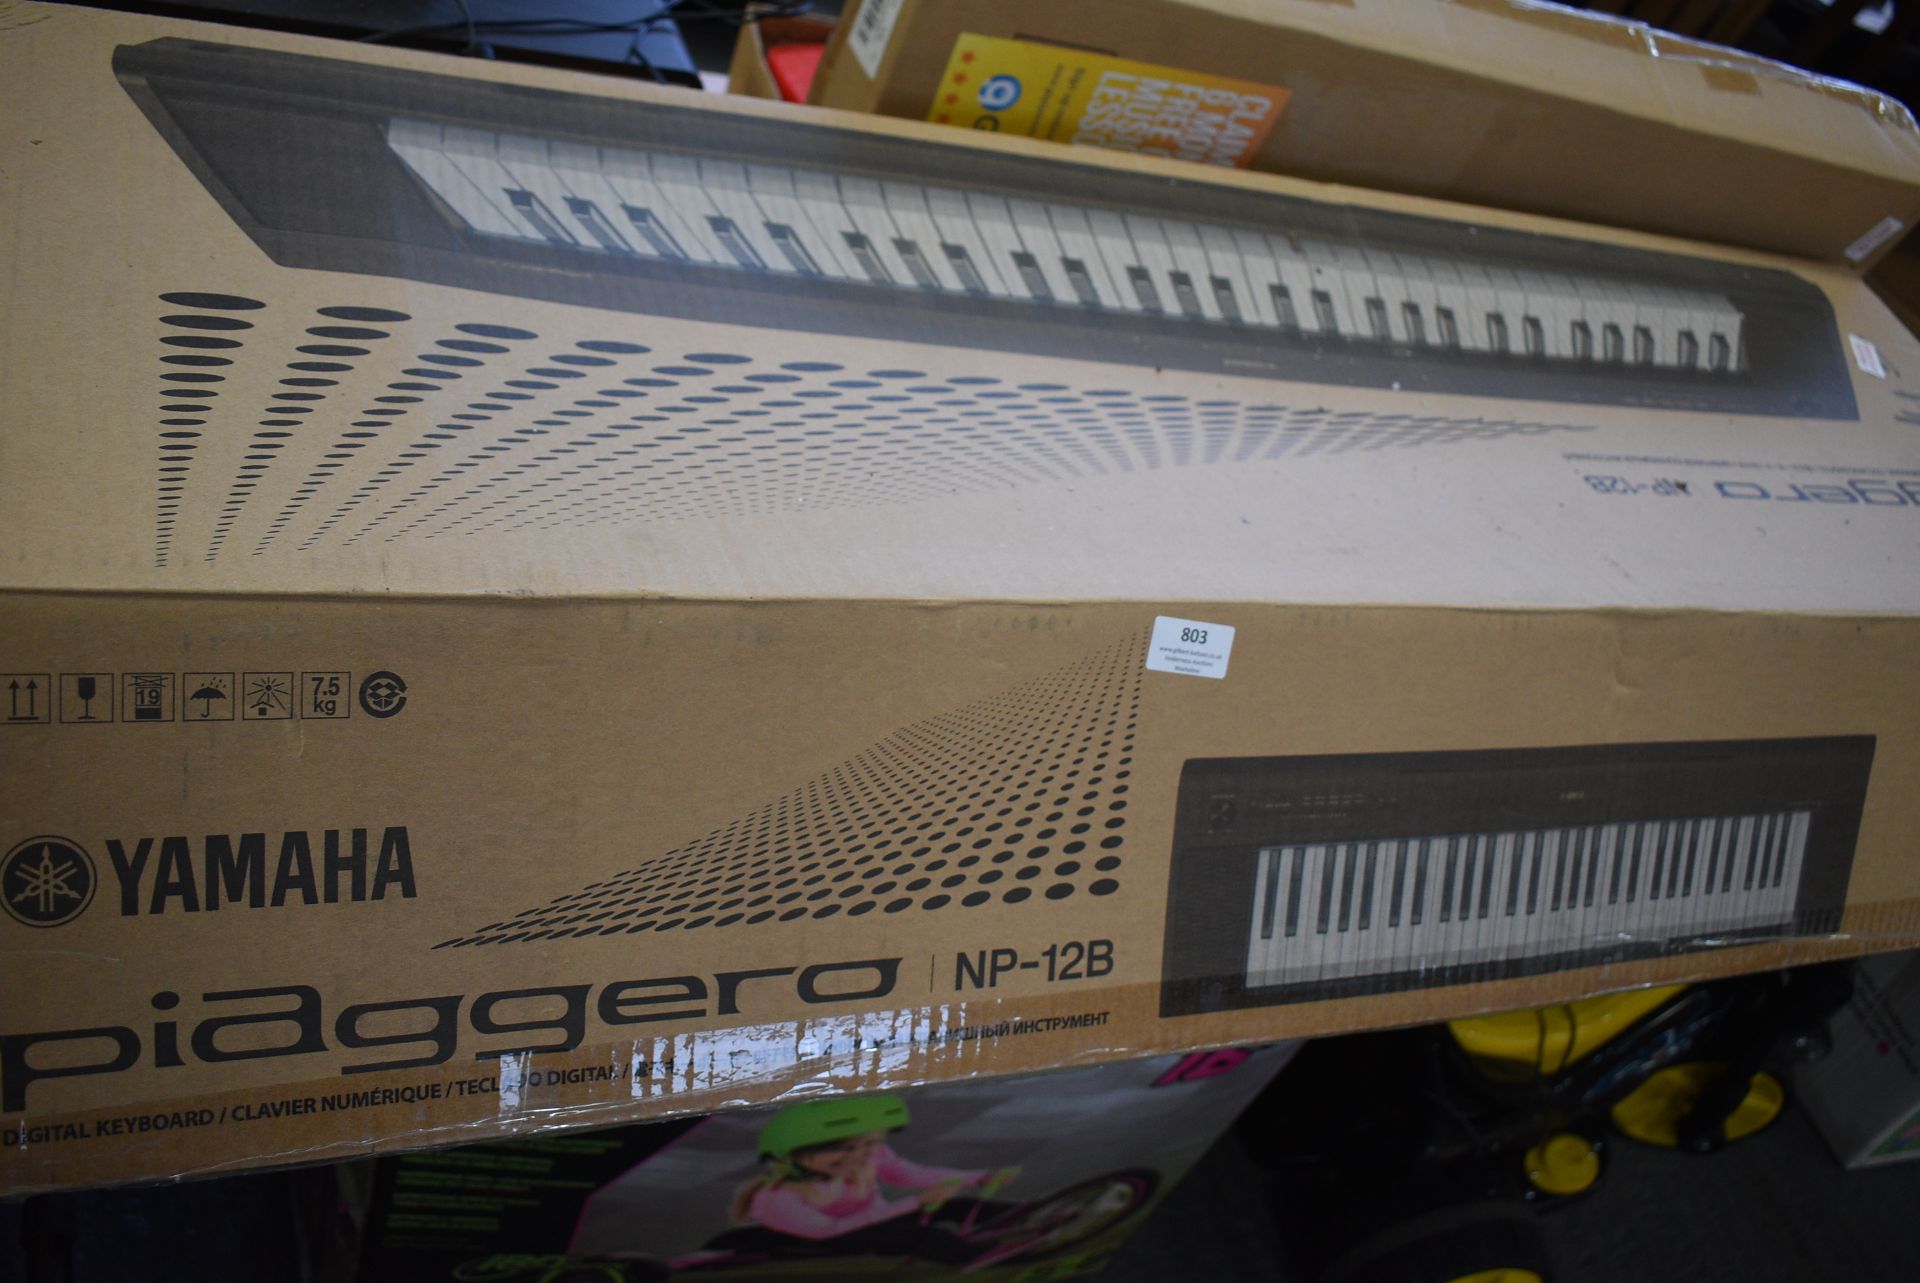 Yamaha Piaggero NP-12B Keyboard - Image 2 of 2